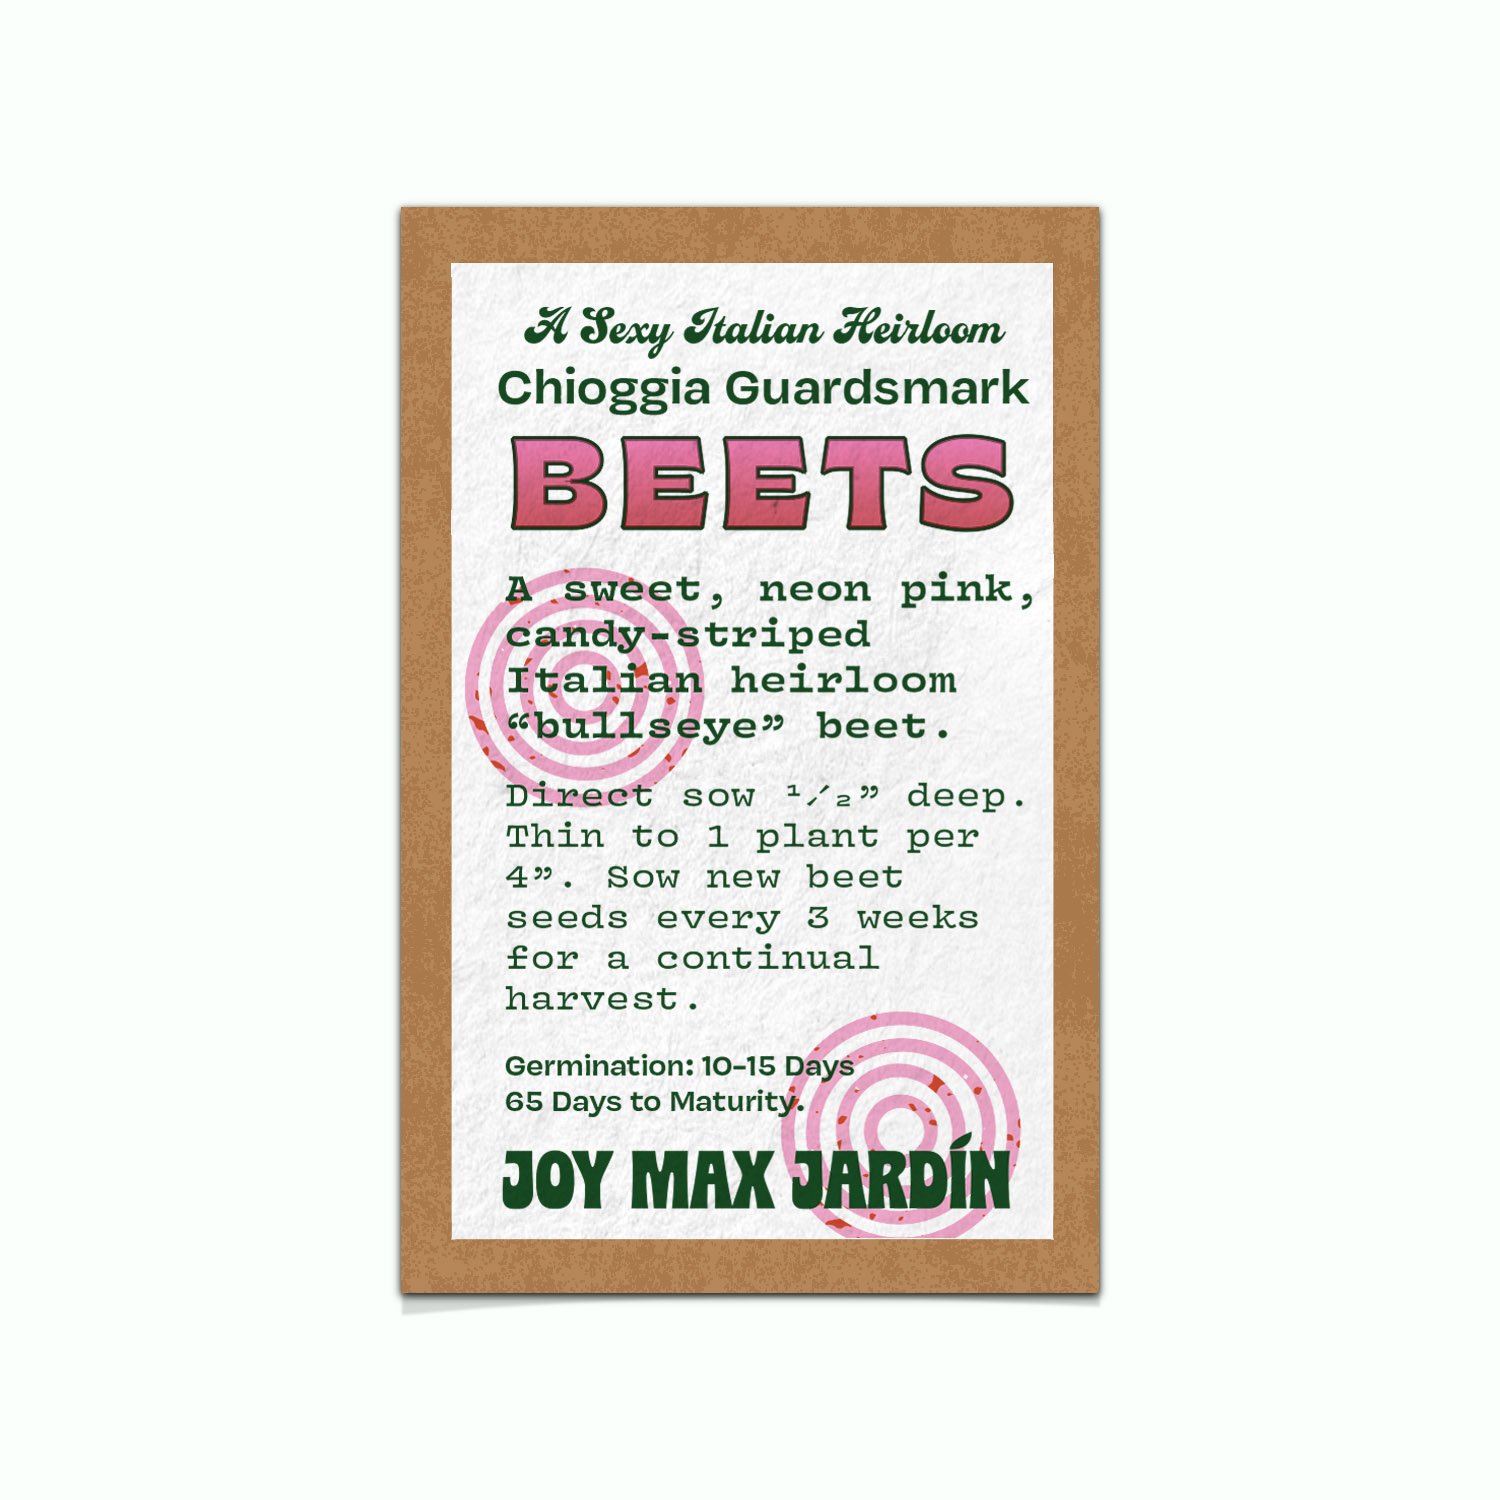 Joy Max Jardin Chioggia Guardsmark Beets.jpg